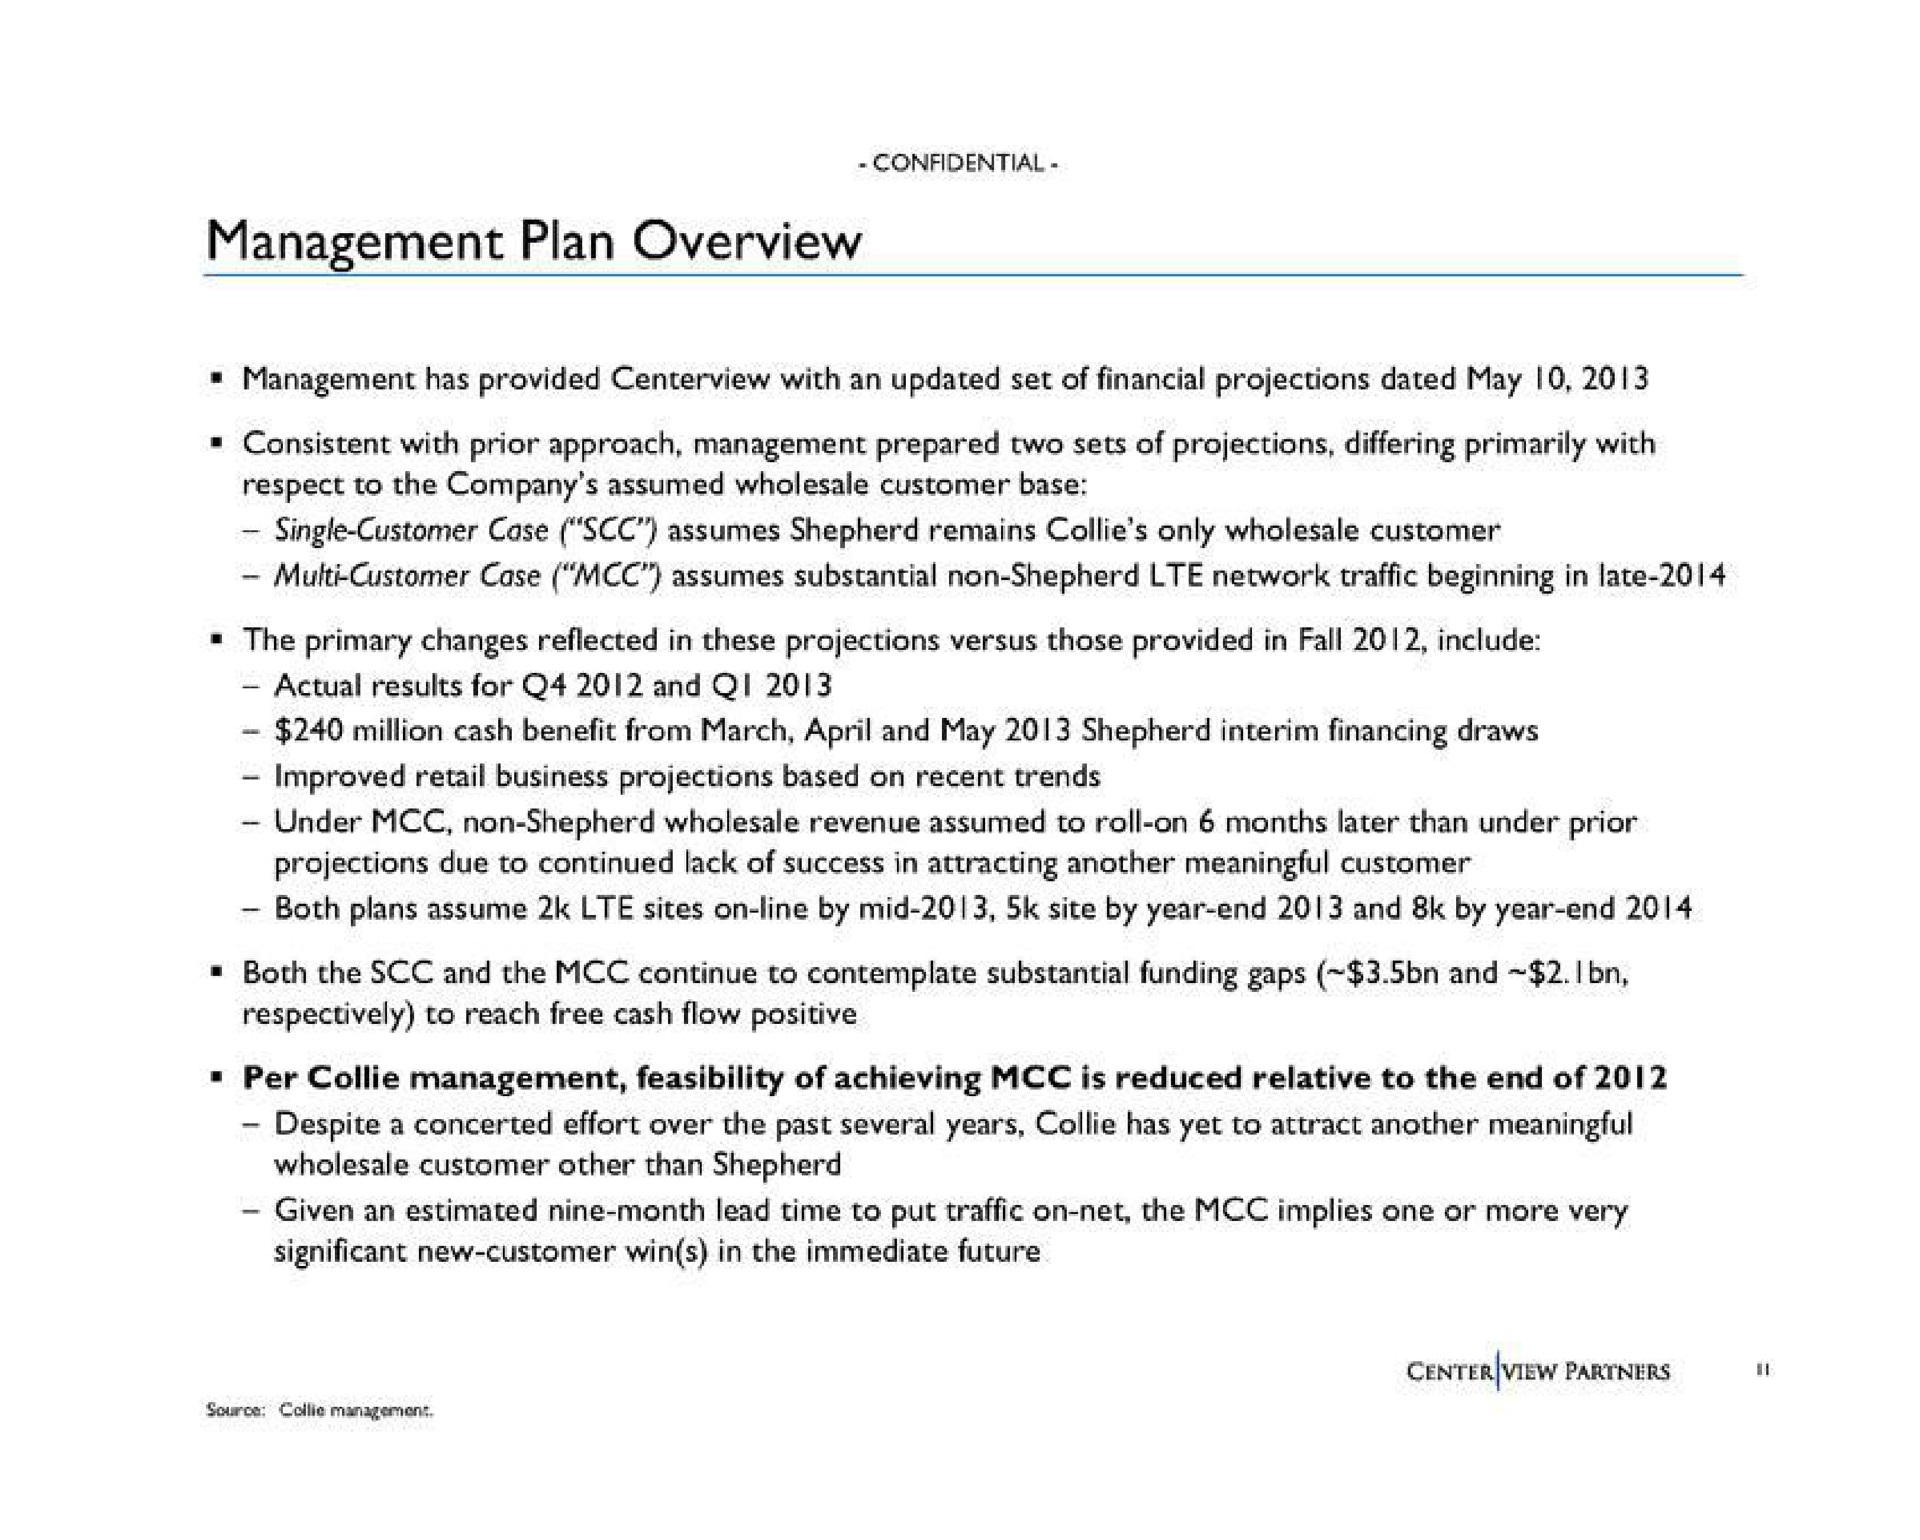 management plan overview | Centerview Partners